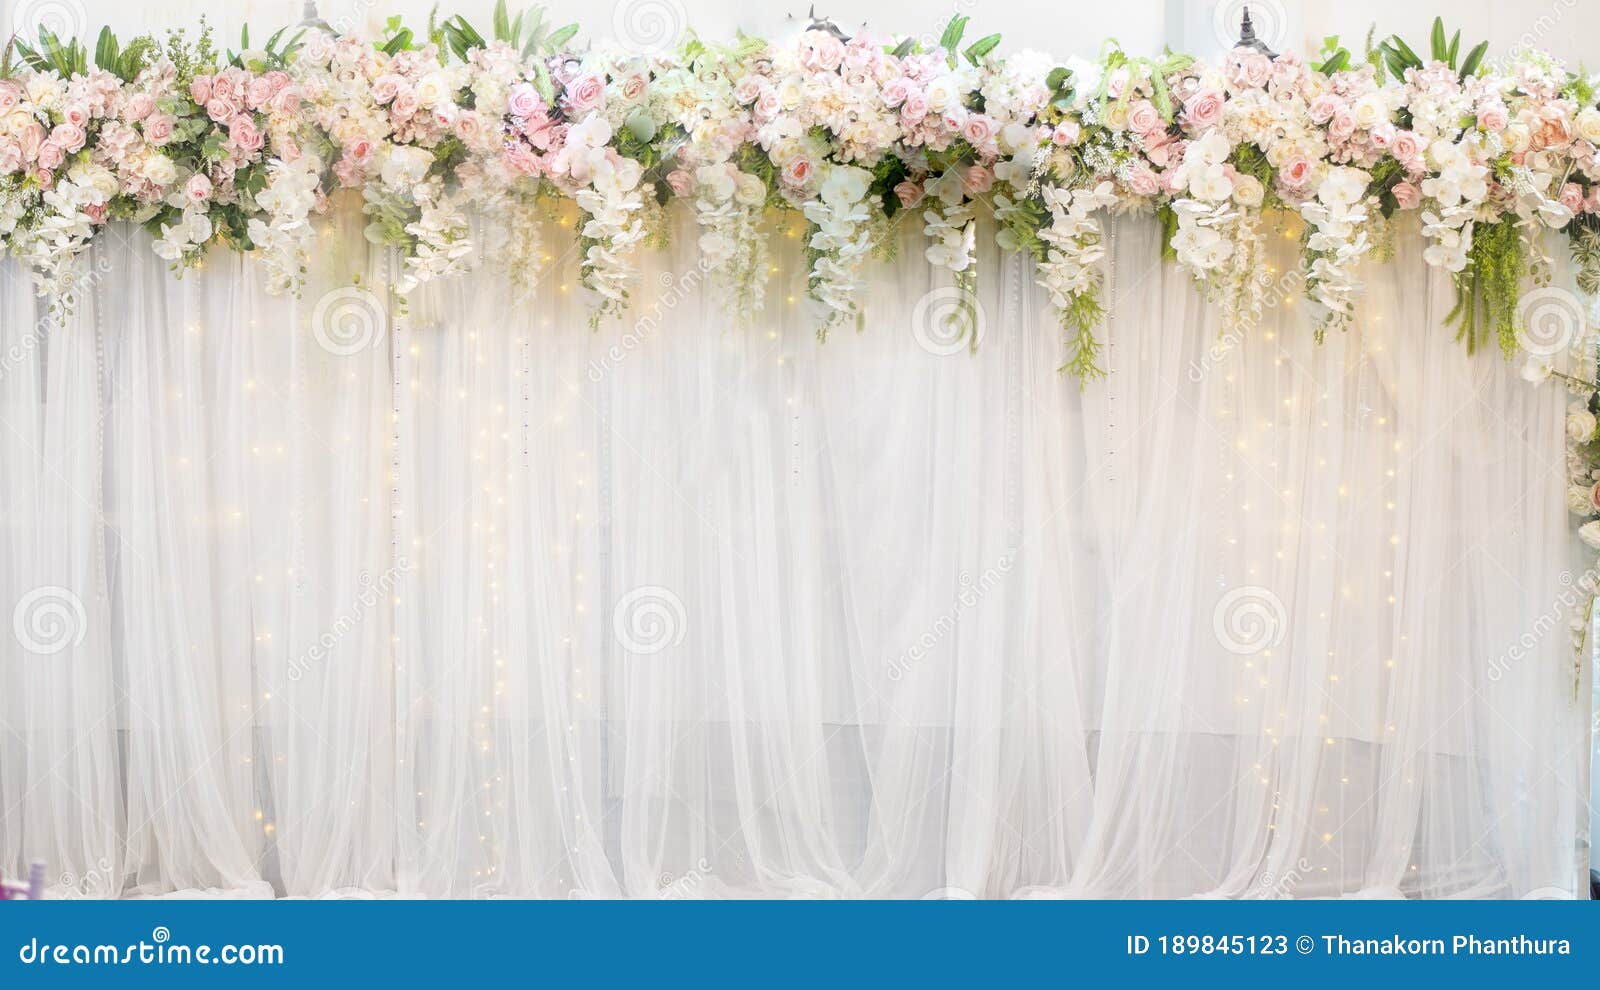 White Wedding Flowers and Wedding Decorations Stock Image - Image of love,  design: 189845123